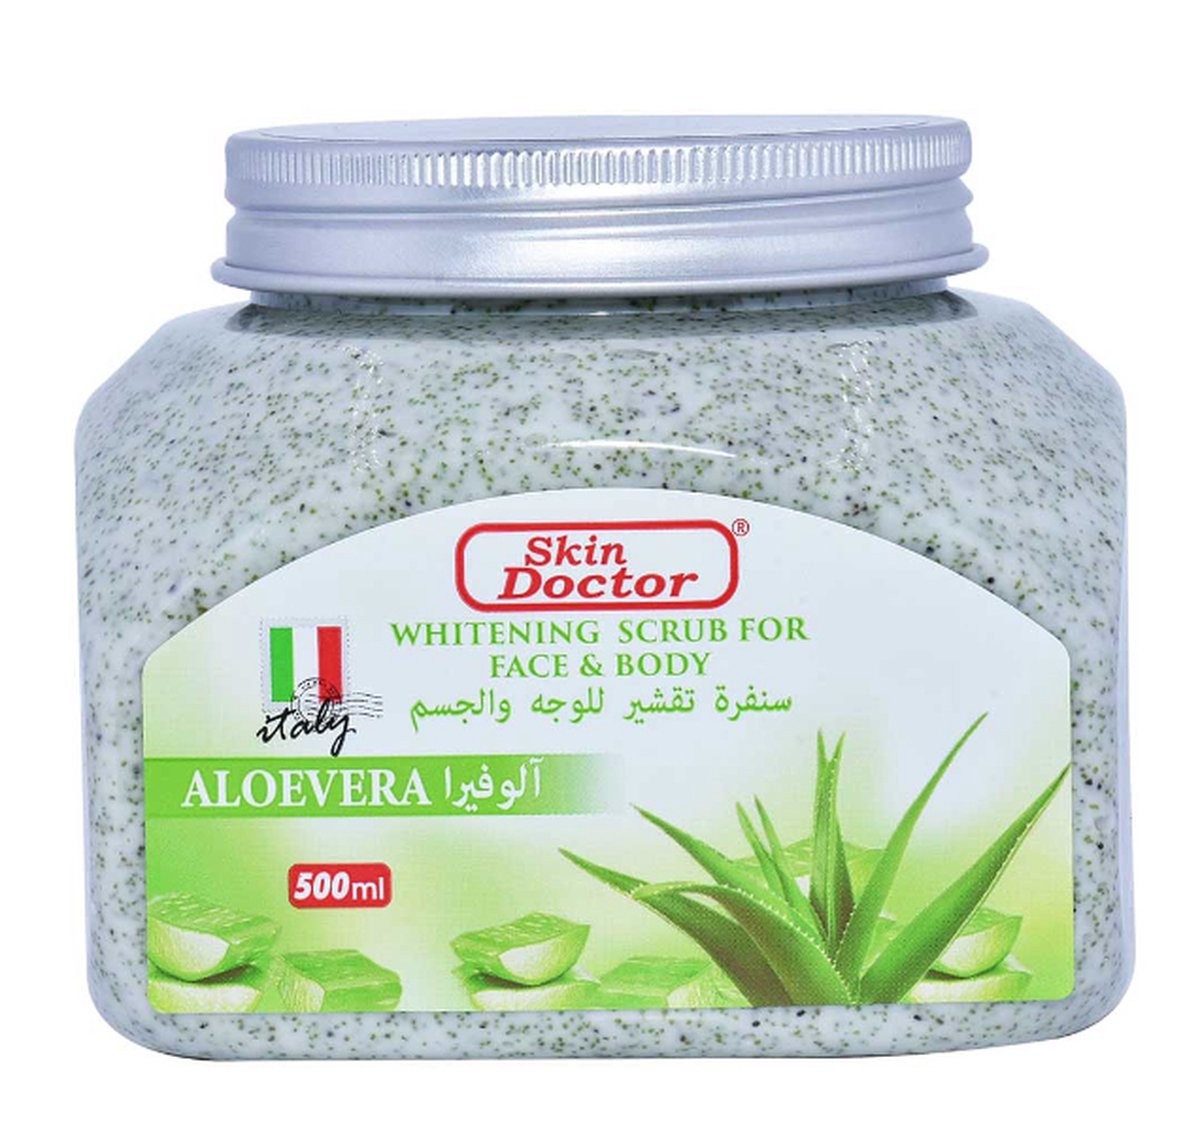 Aloe vera Whitening Scrub For Face & Body (500g) - Skin Doctors